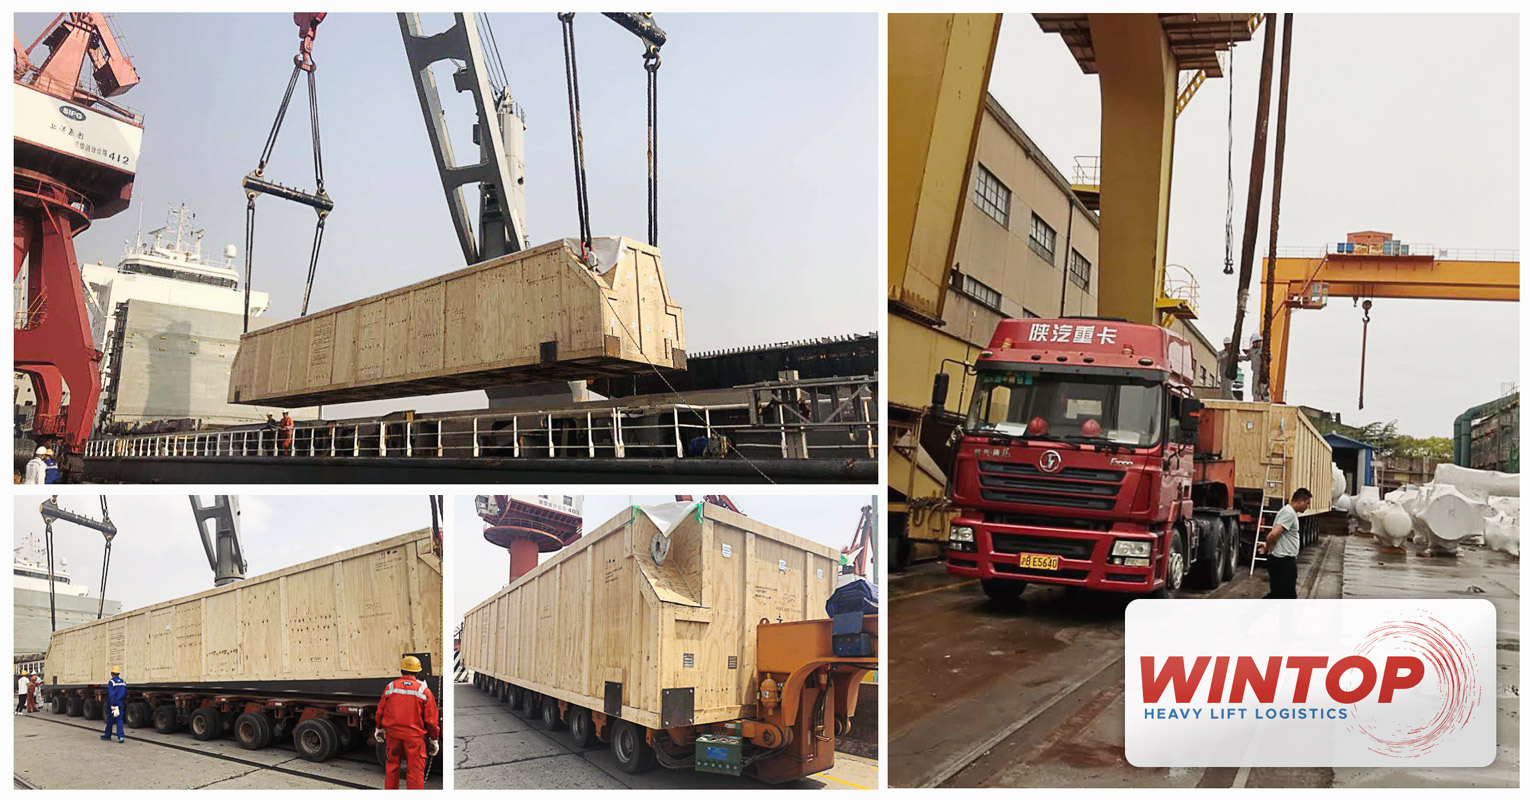 HK Wintop Logistics Enterprise - Shanghai Branch handled heavylift cargo